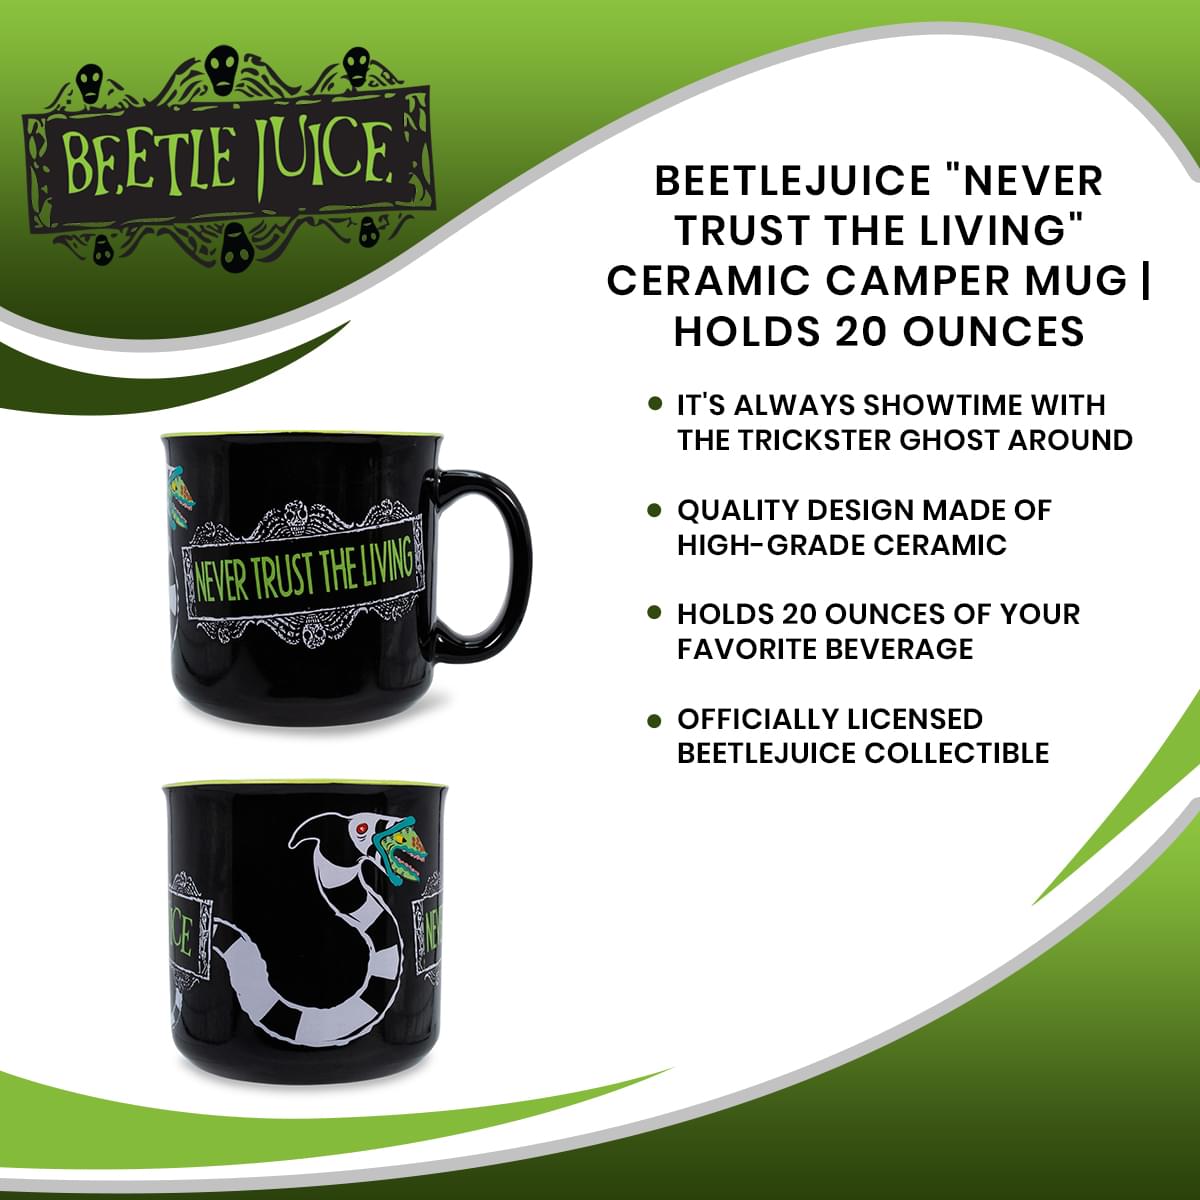 Beetlejuice "Never Trust the Living" Ceramic Camper Mug | Holds 20 Ounces